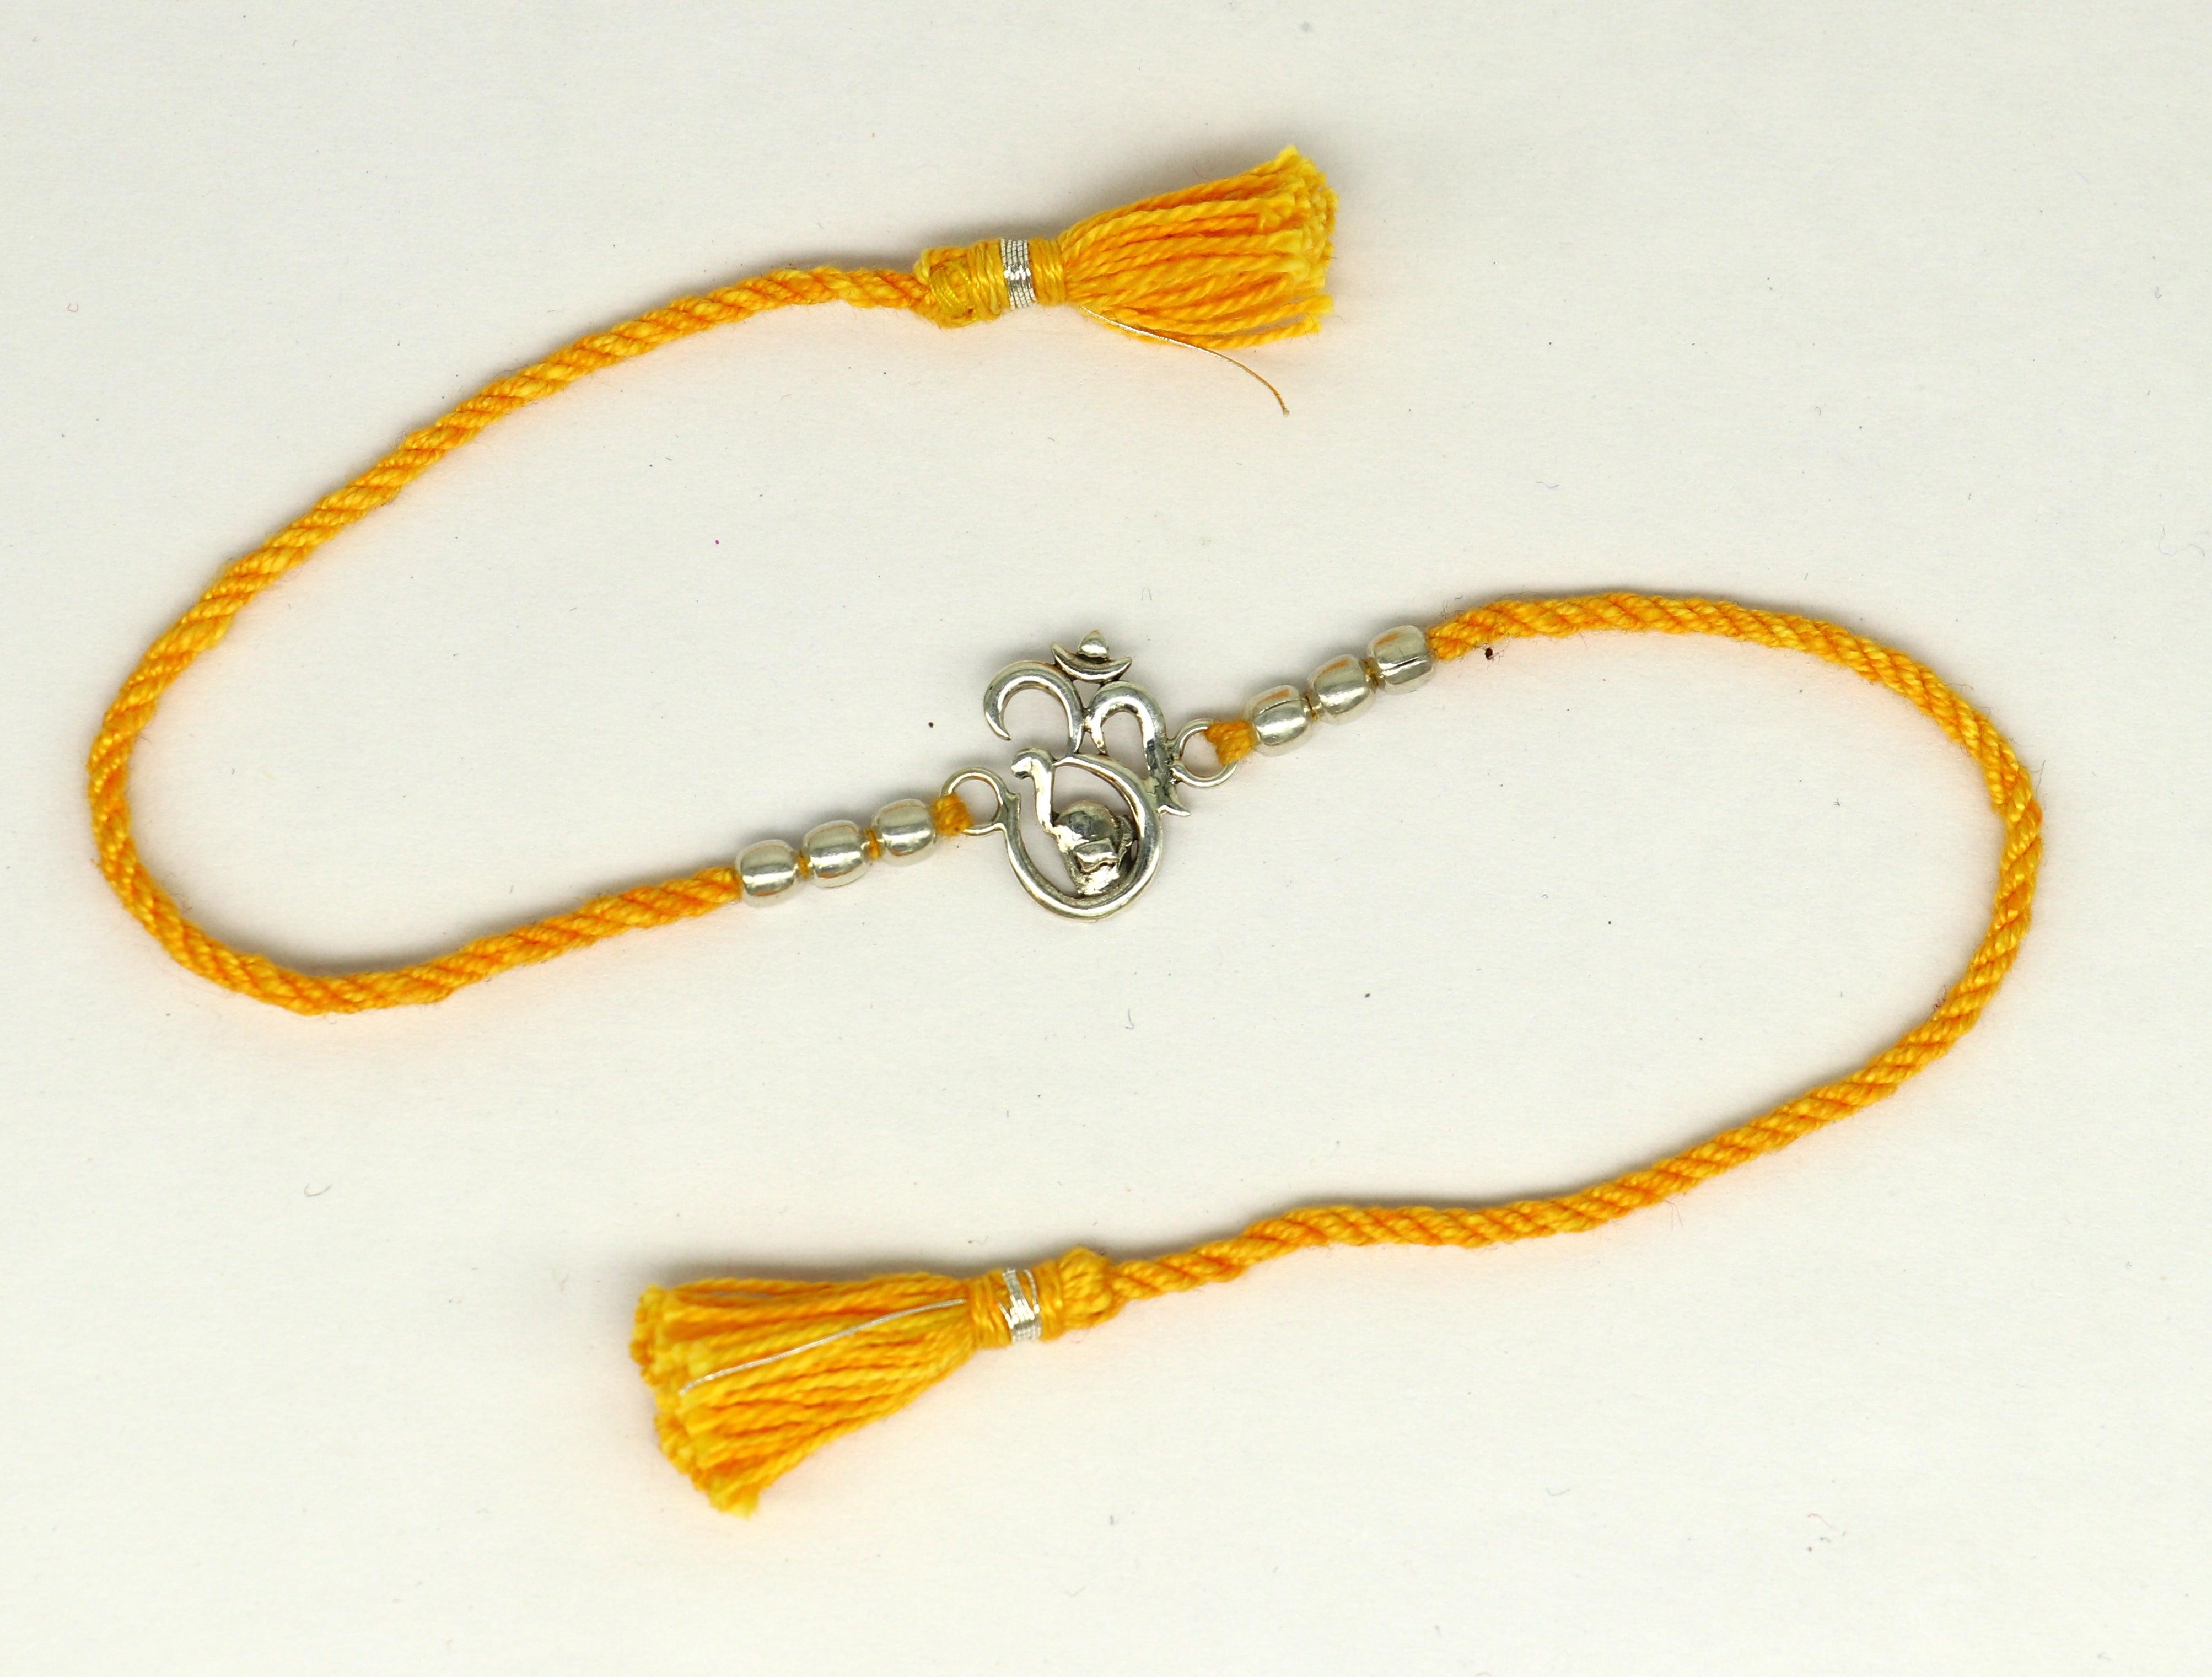 Amazon.com: Custom Friendship Bracelet for Men Women Kids - Handmade  Macrame Knotted Rope Jewelry Best Friends Gift : Handmade Products